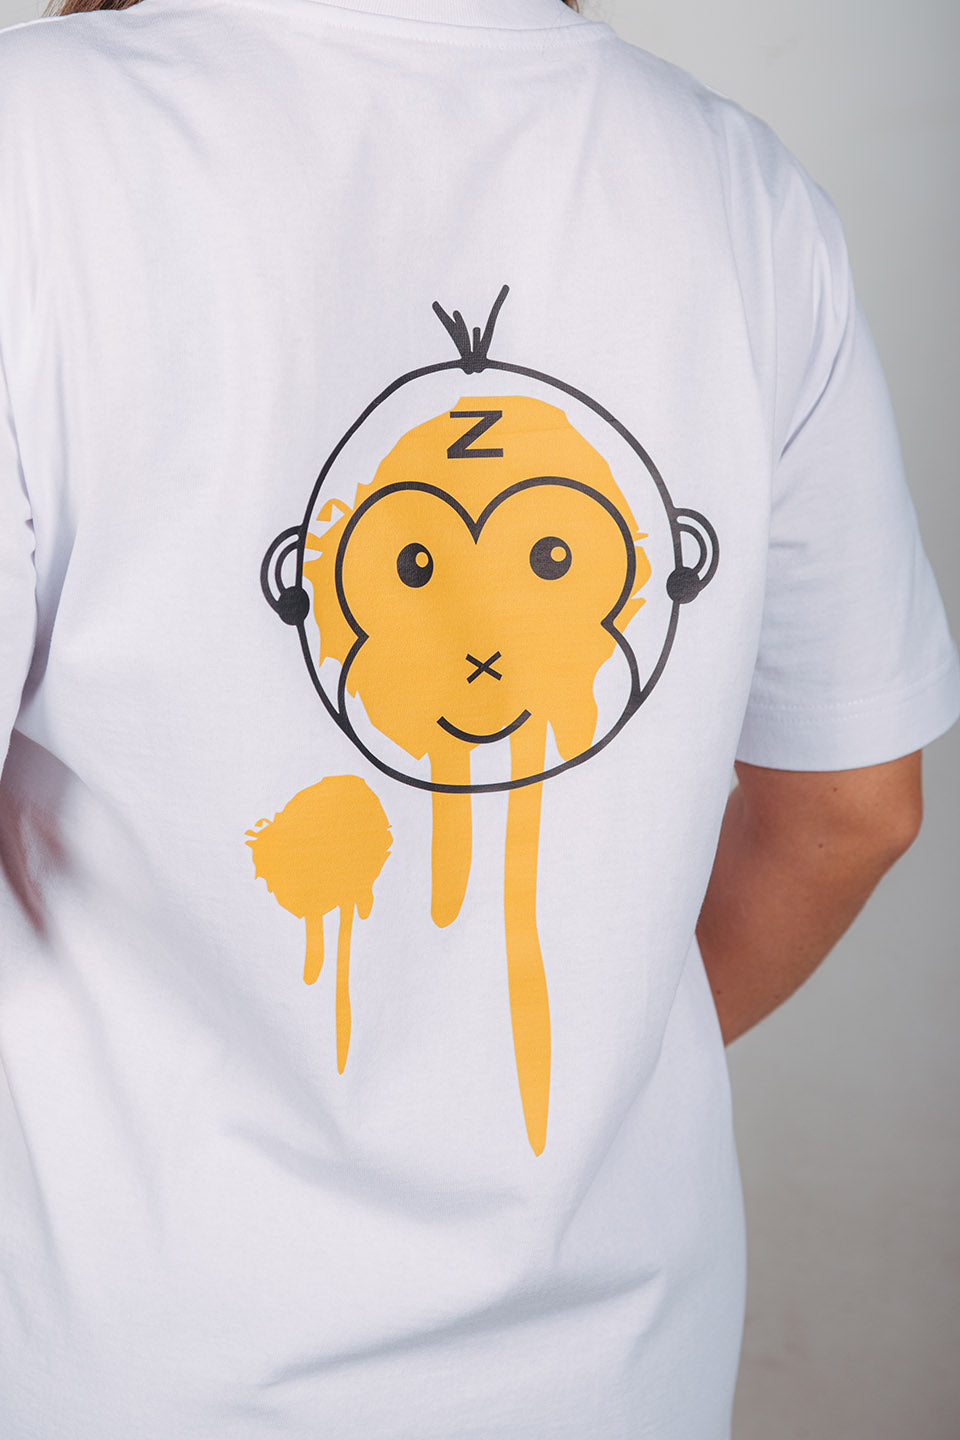 Zengange Premium – White colored T-shirt with orange details.